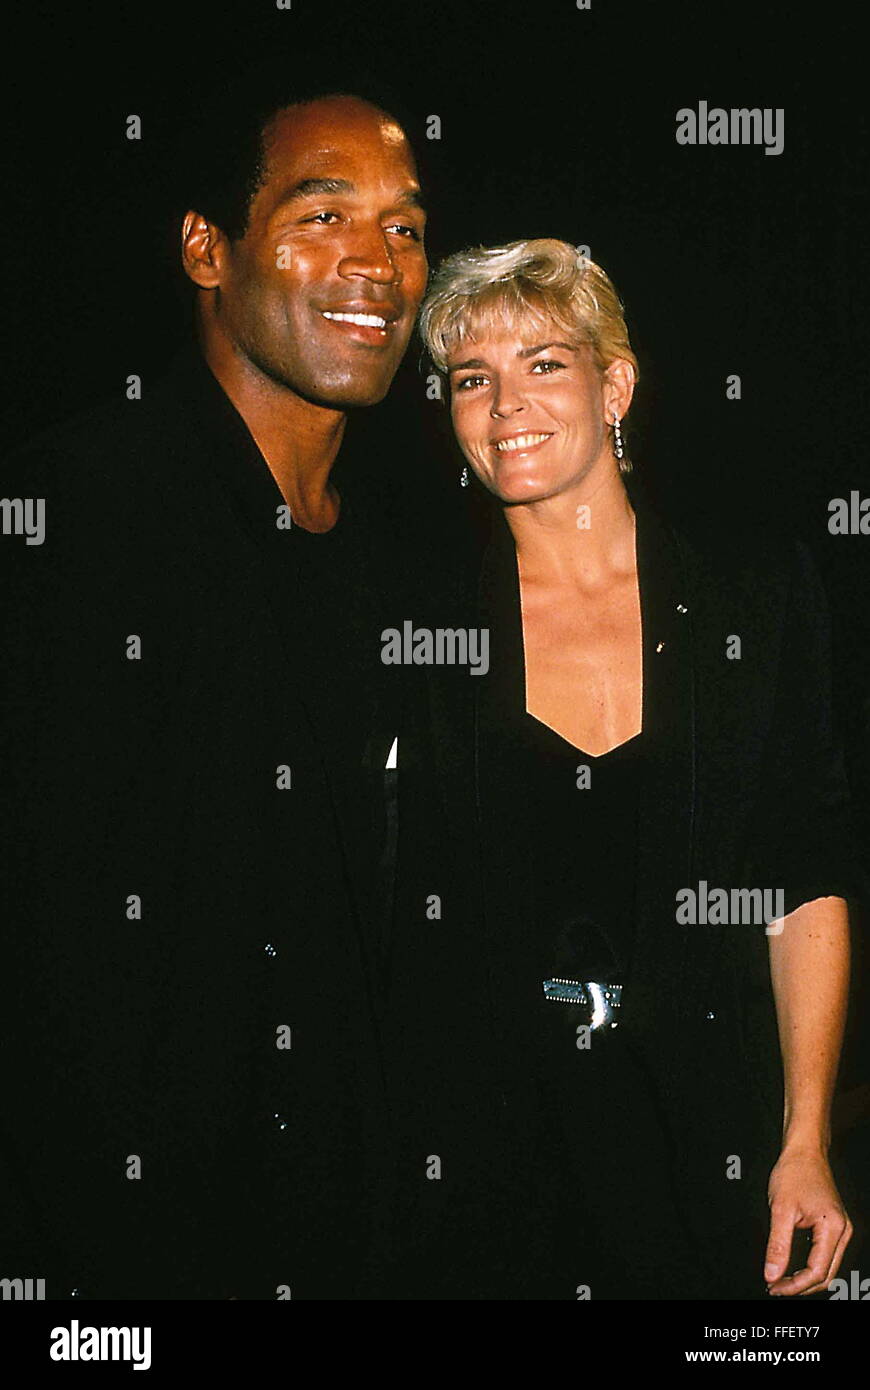 Los Angeles, California, USA. 11th June, 1987. O.J. SIMPSON and NICOLE BROWN SIMPSON out to dinner. © Phil Roach/Globe Photos/ZUMAPRESS.com/Alamy Live News Stock Photo